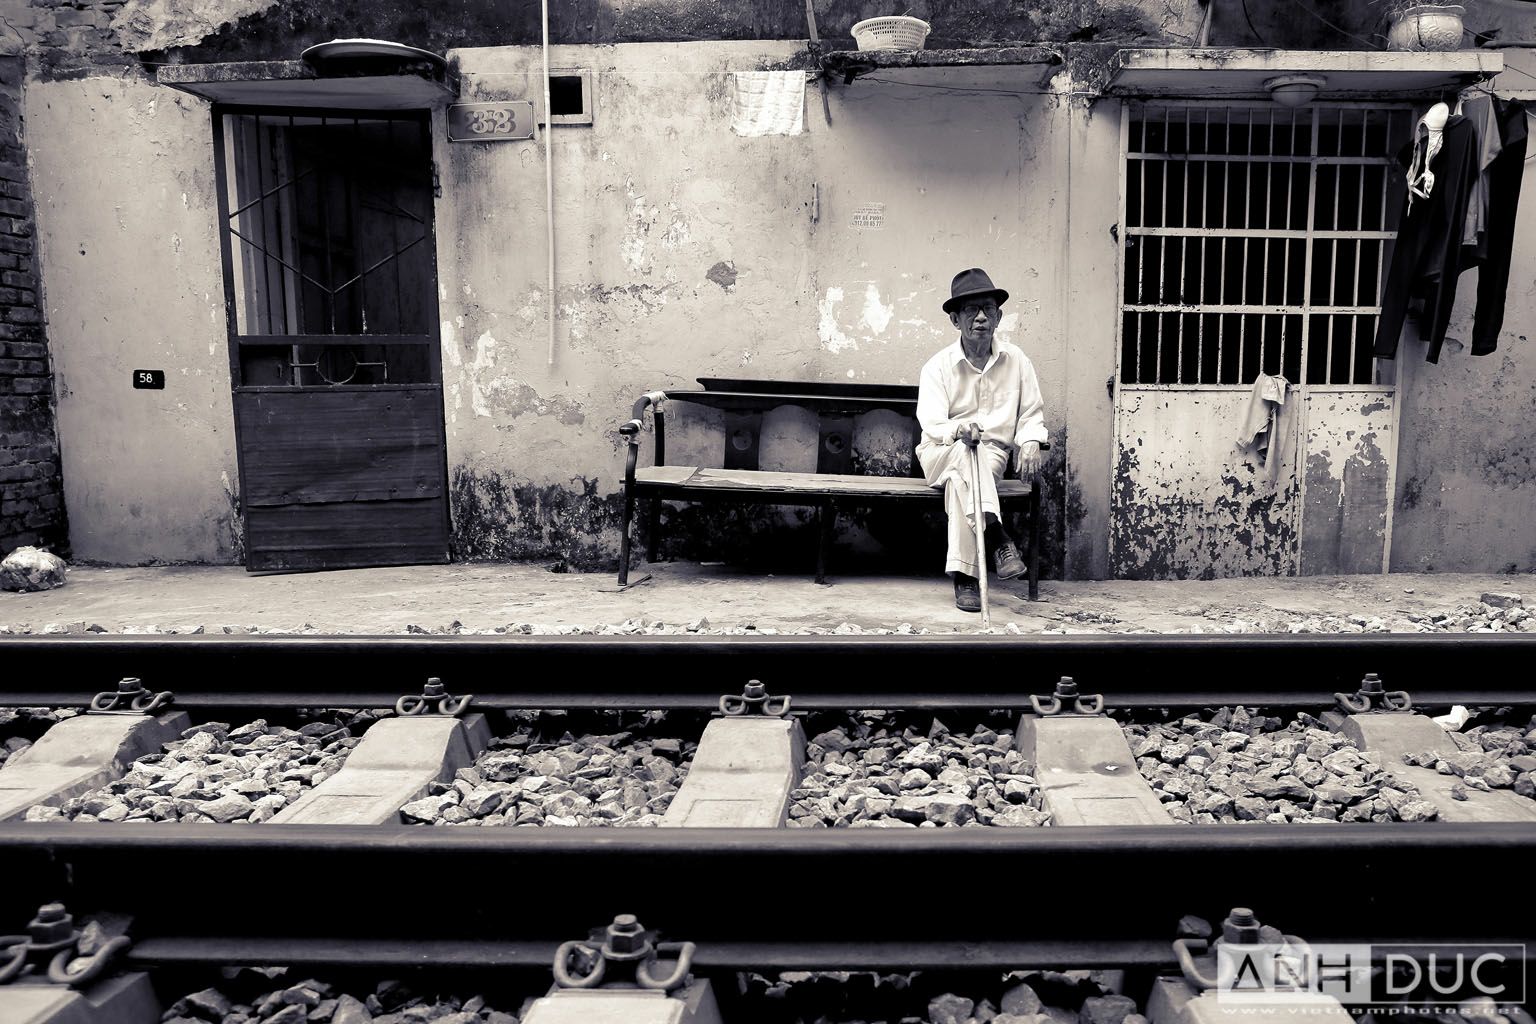 Life beside the railway